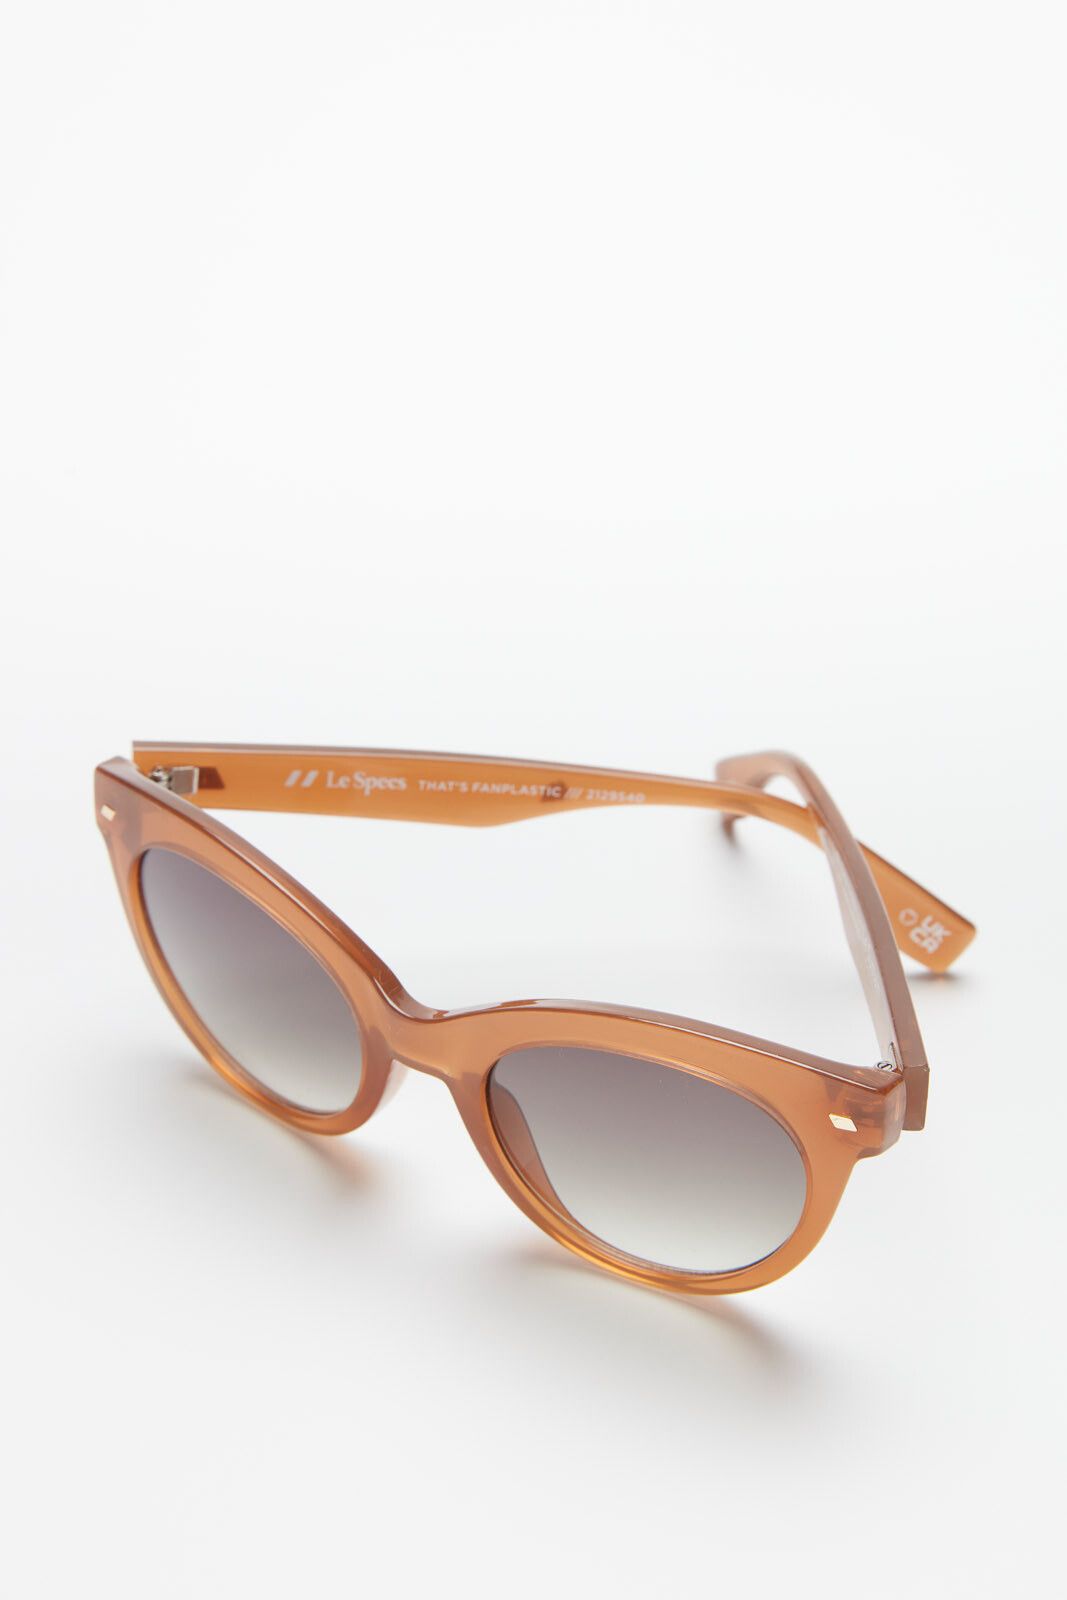 LE SPECS That's Fanplastic Sunglasses | EVEREVE | Evereve